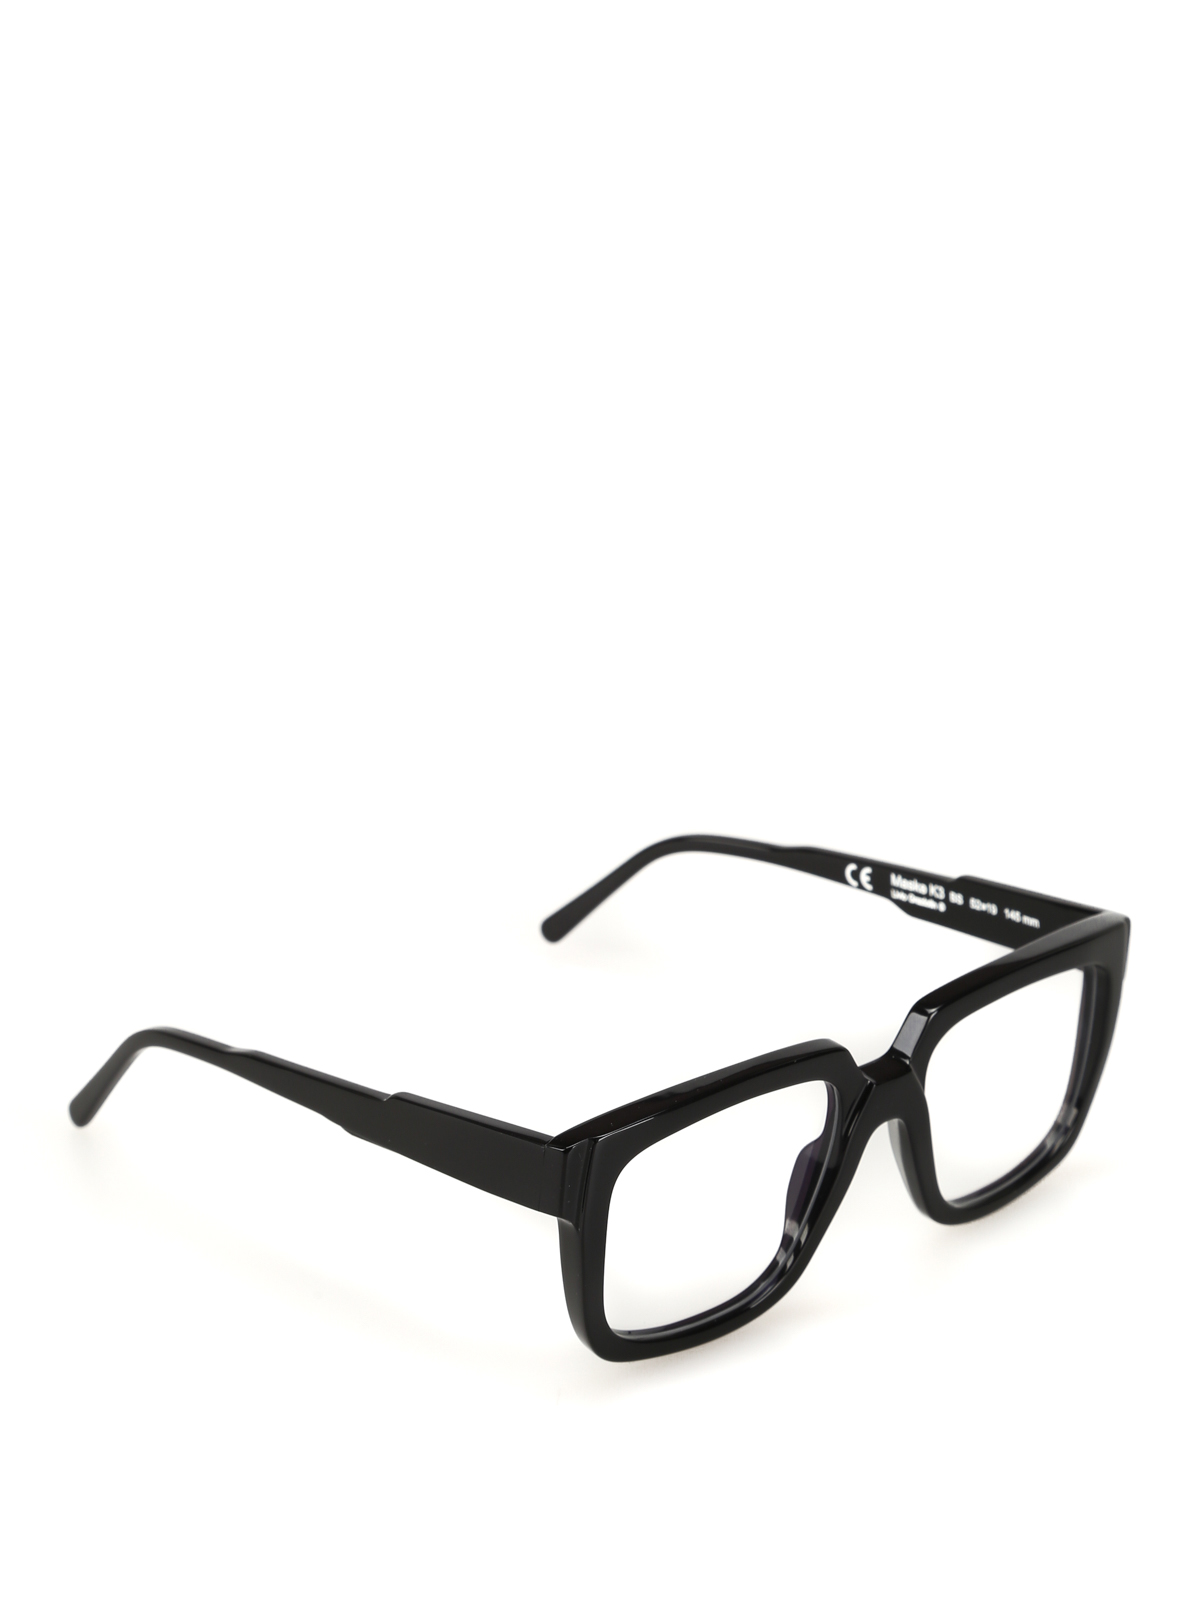 Kuboraum - Maske K3 optical glasses - Glasses - K3BS